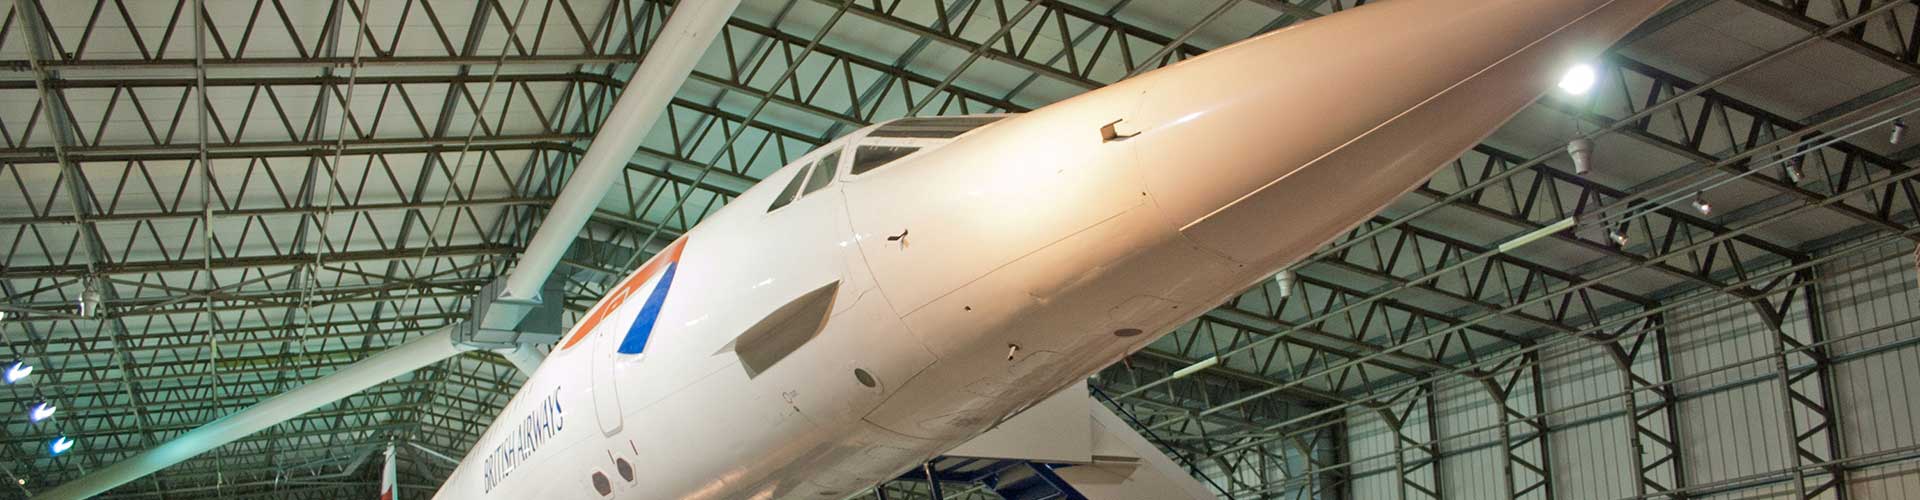 Destratification Fan System Concorde-Exhibit